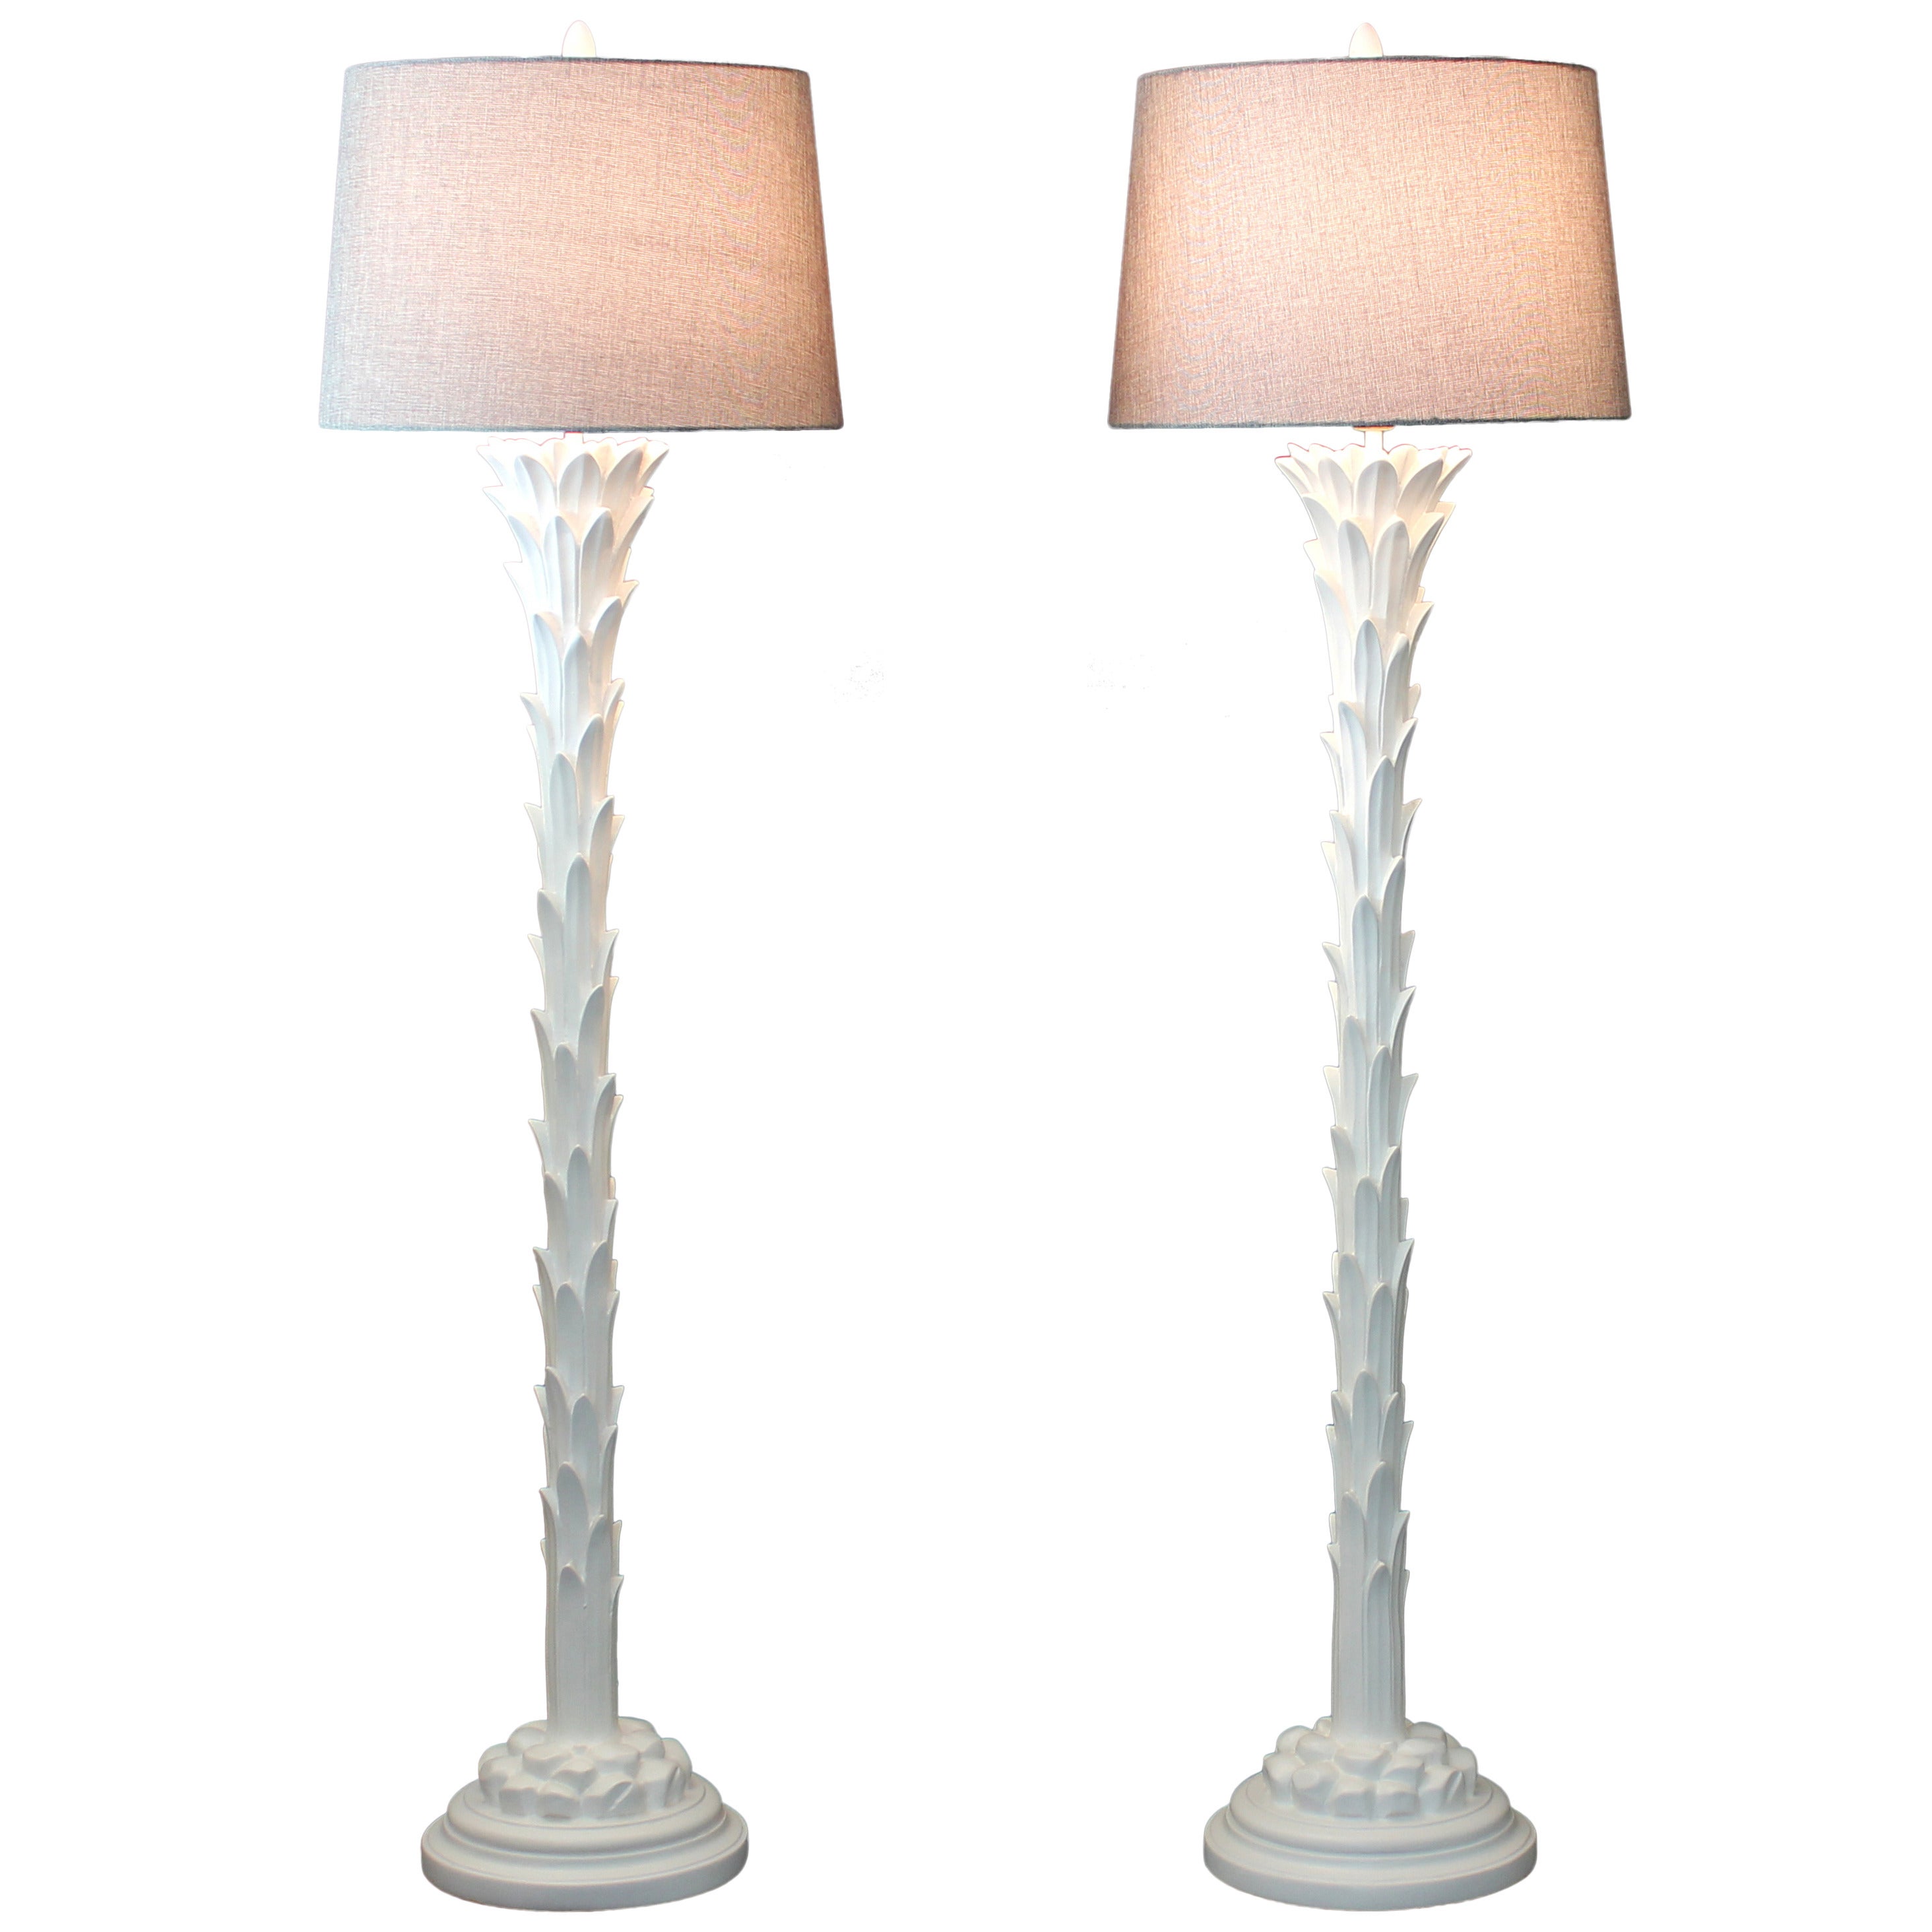 Pair of Chapman Serge Roche Art Deco Style Palm Tree Floor Lamps